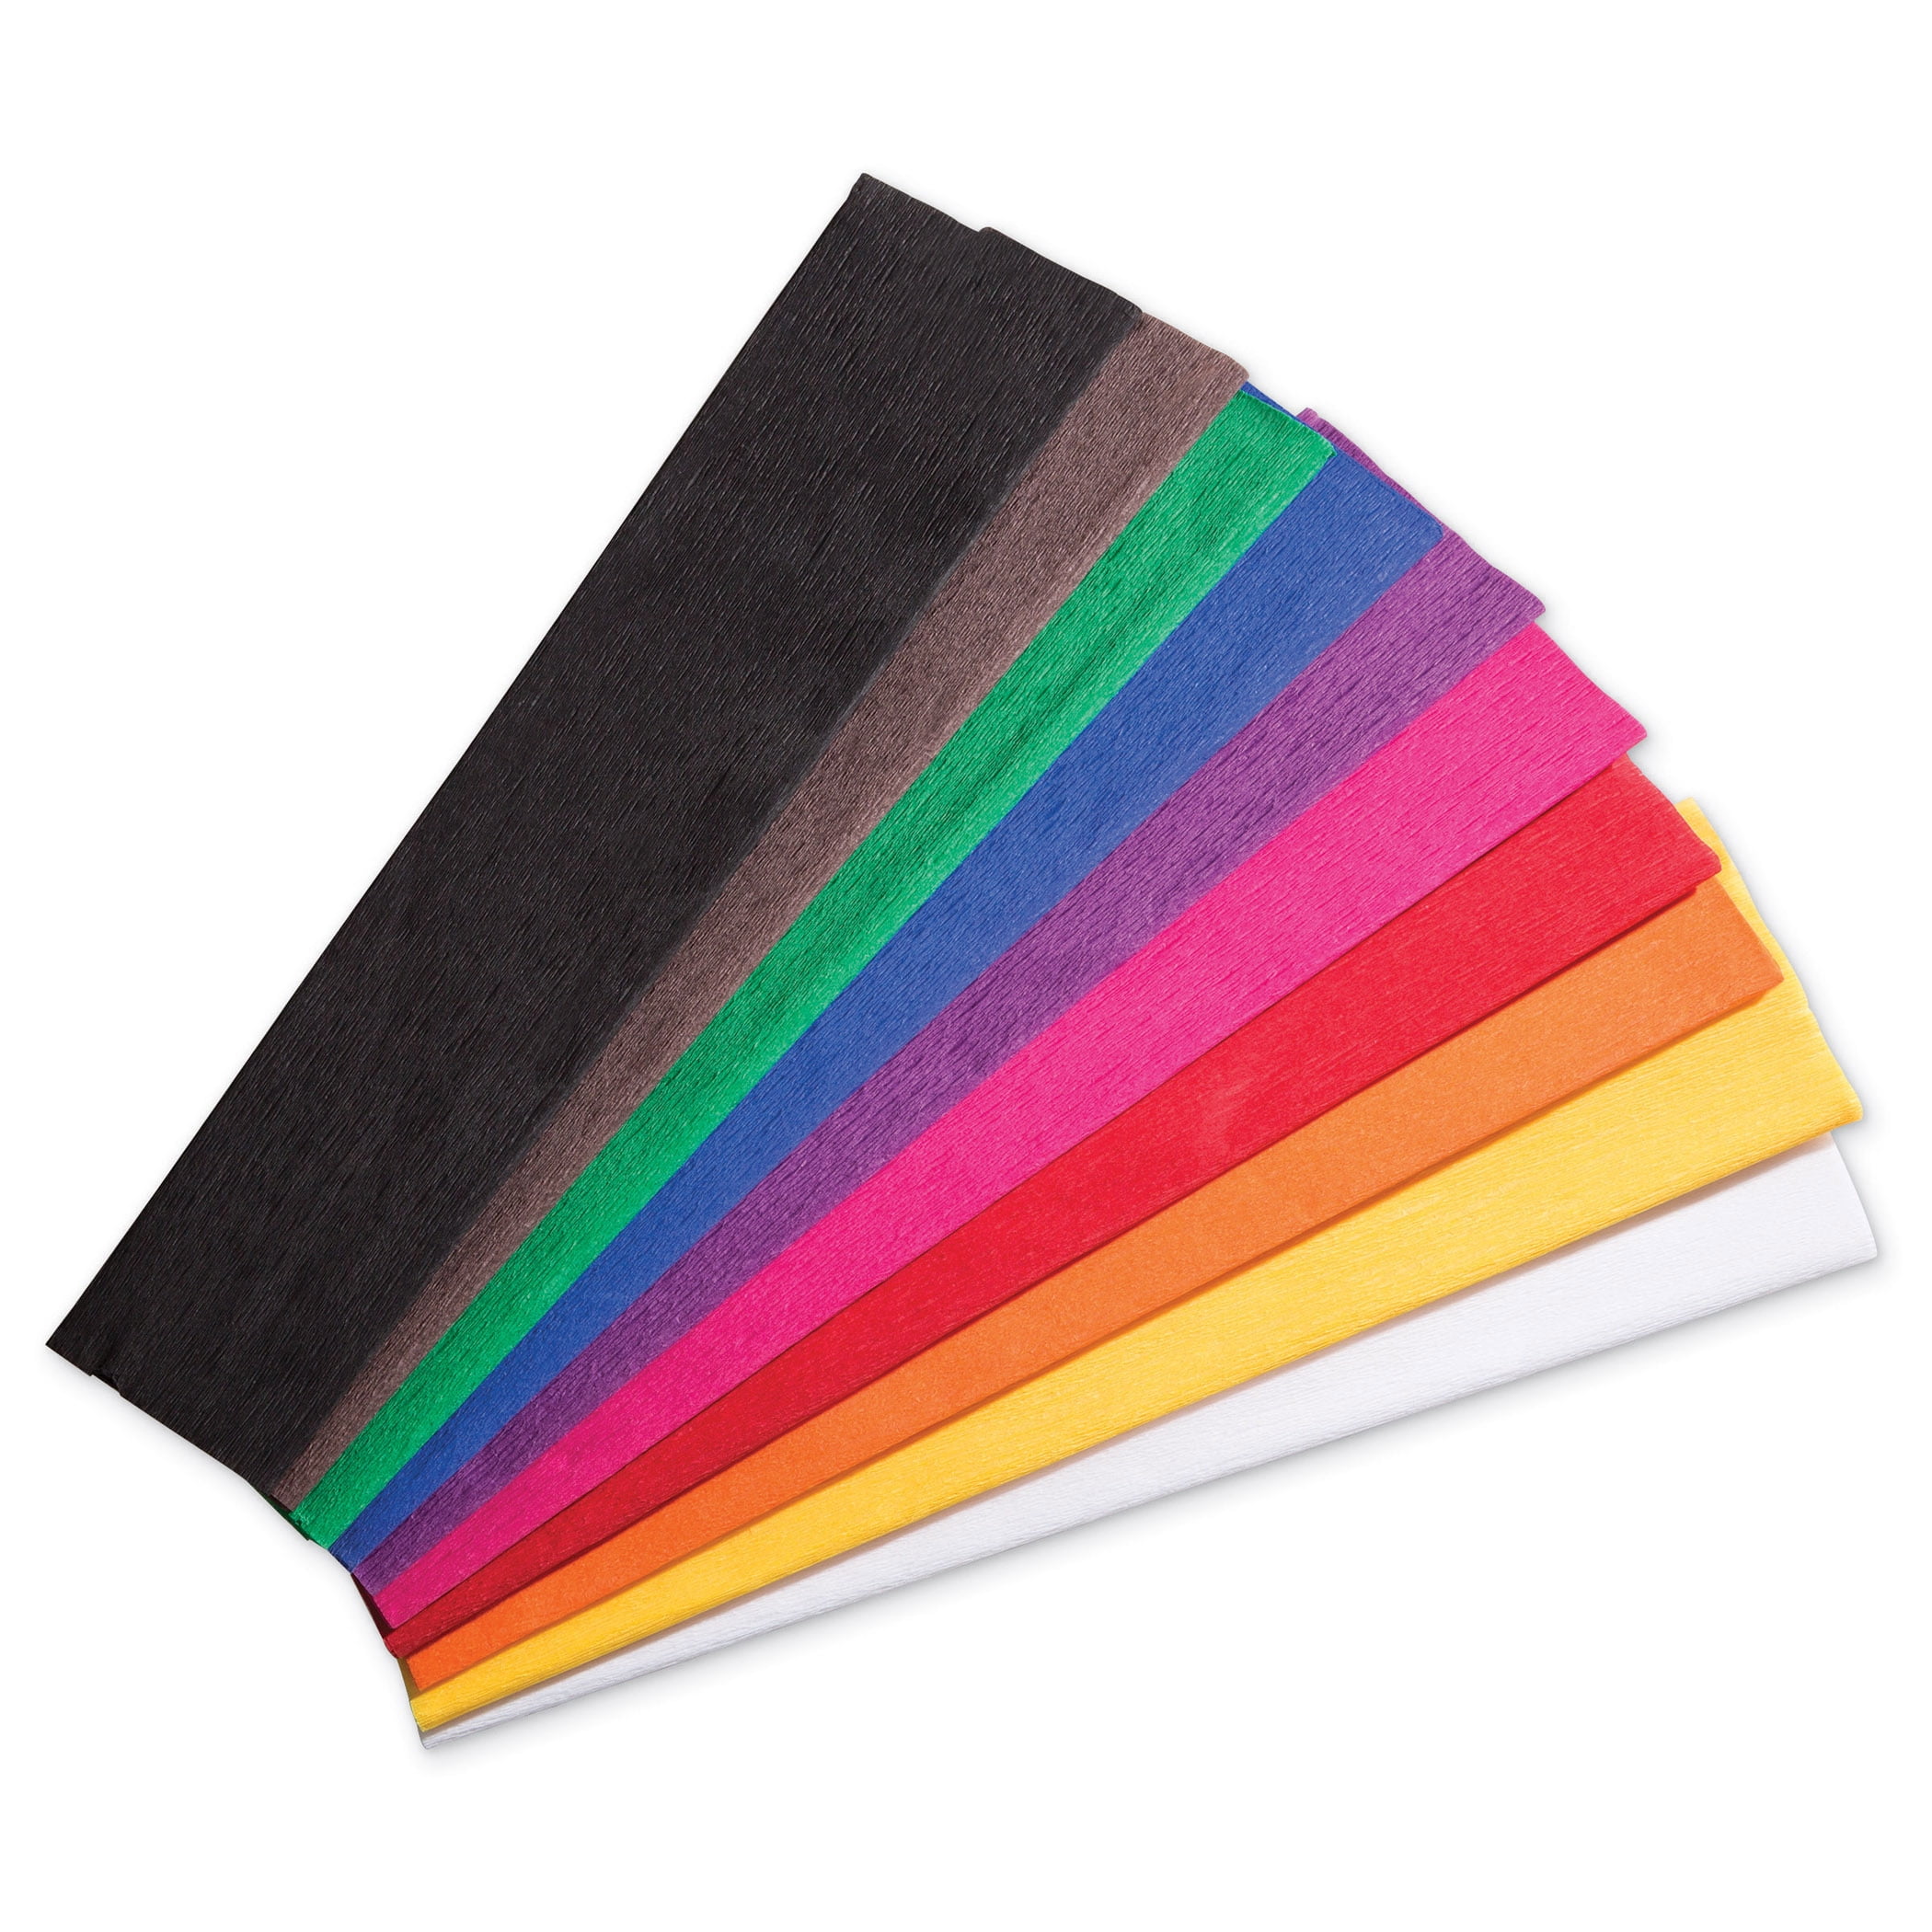 10 Color Asst Crepe Paper Creativity Street